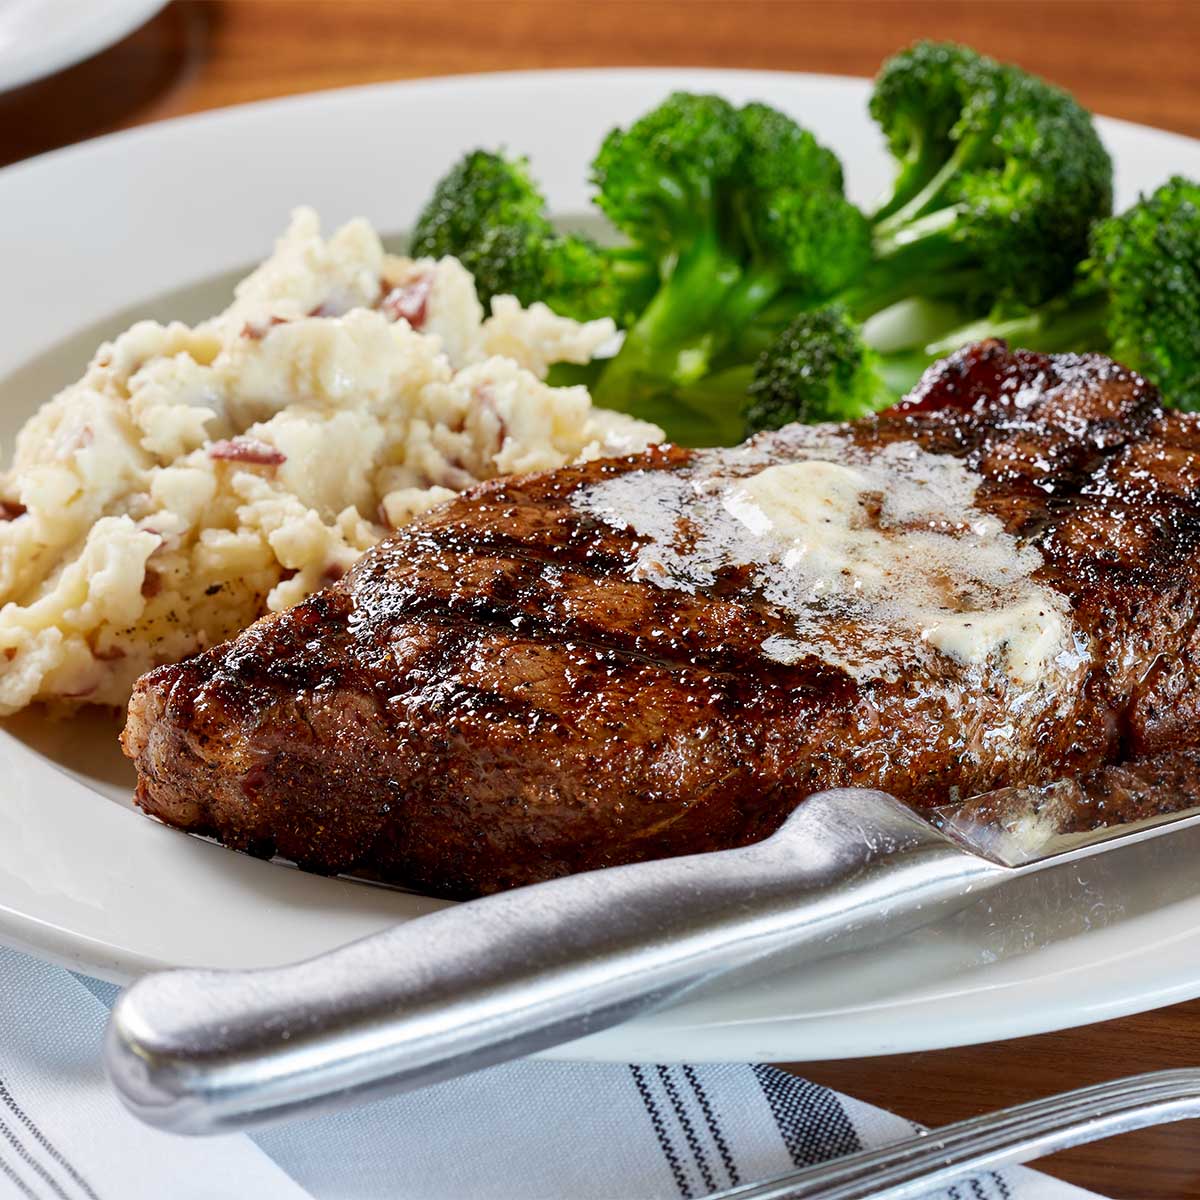 New York strip steak with mashed potatoes and broccoli at Burtons Burlington location